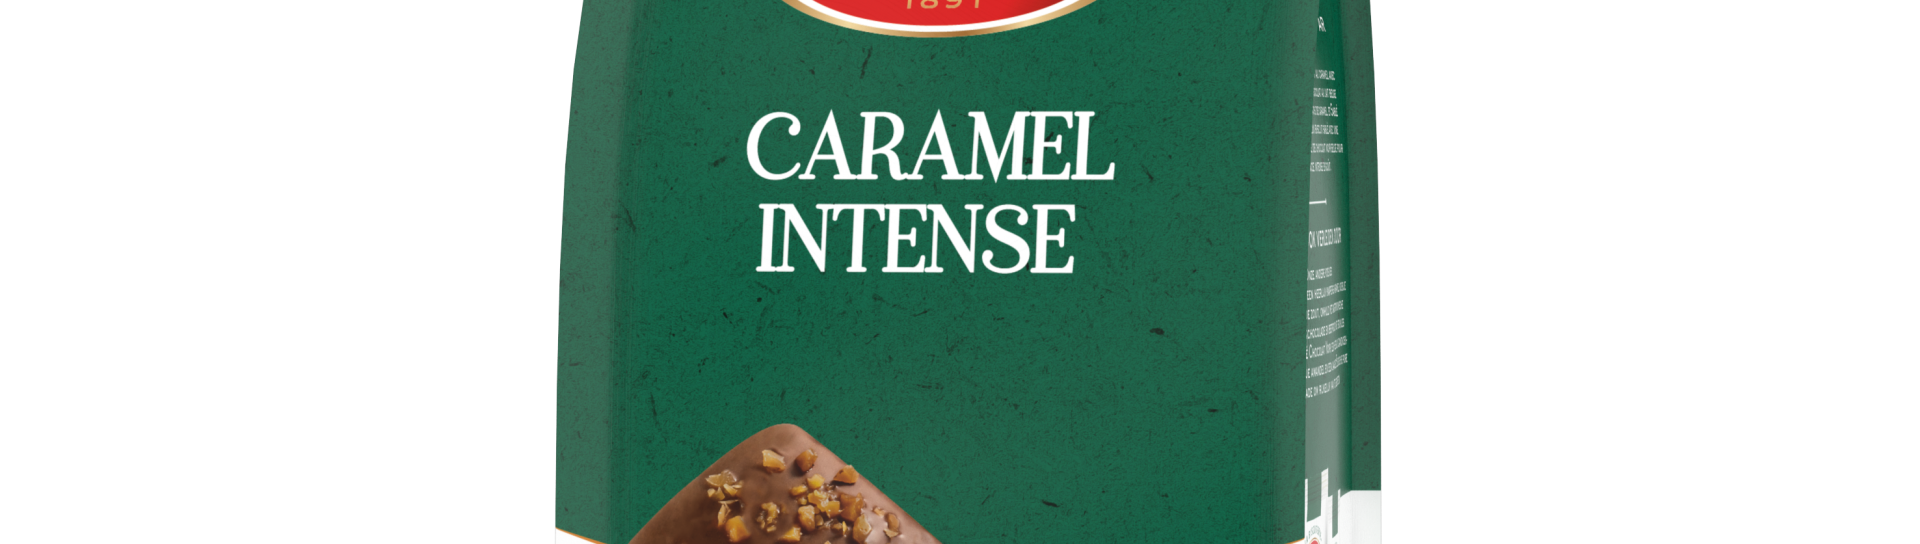 caramel intense png new